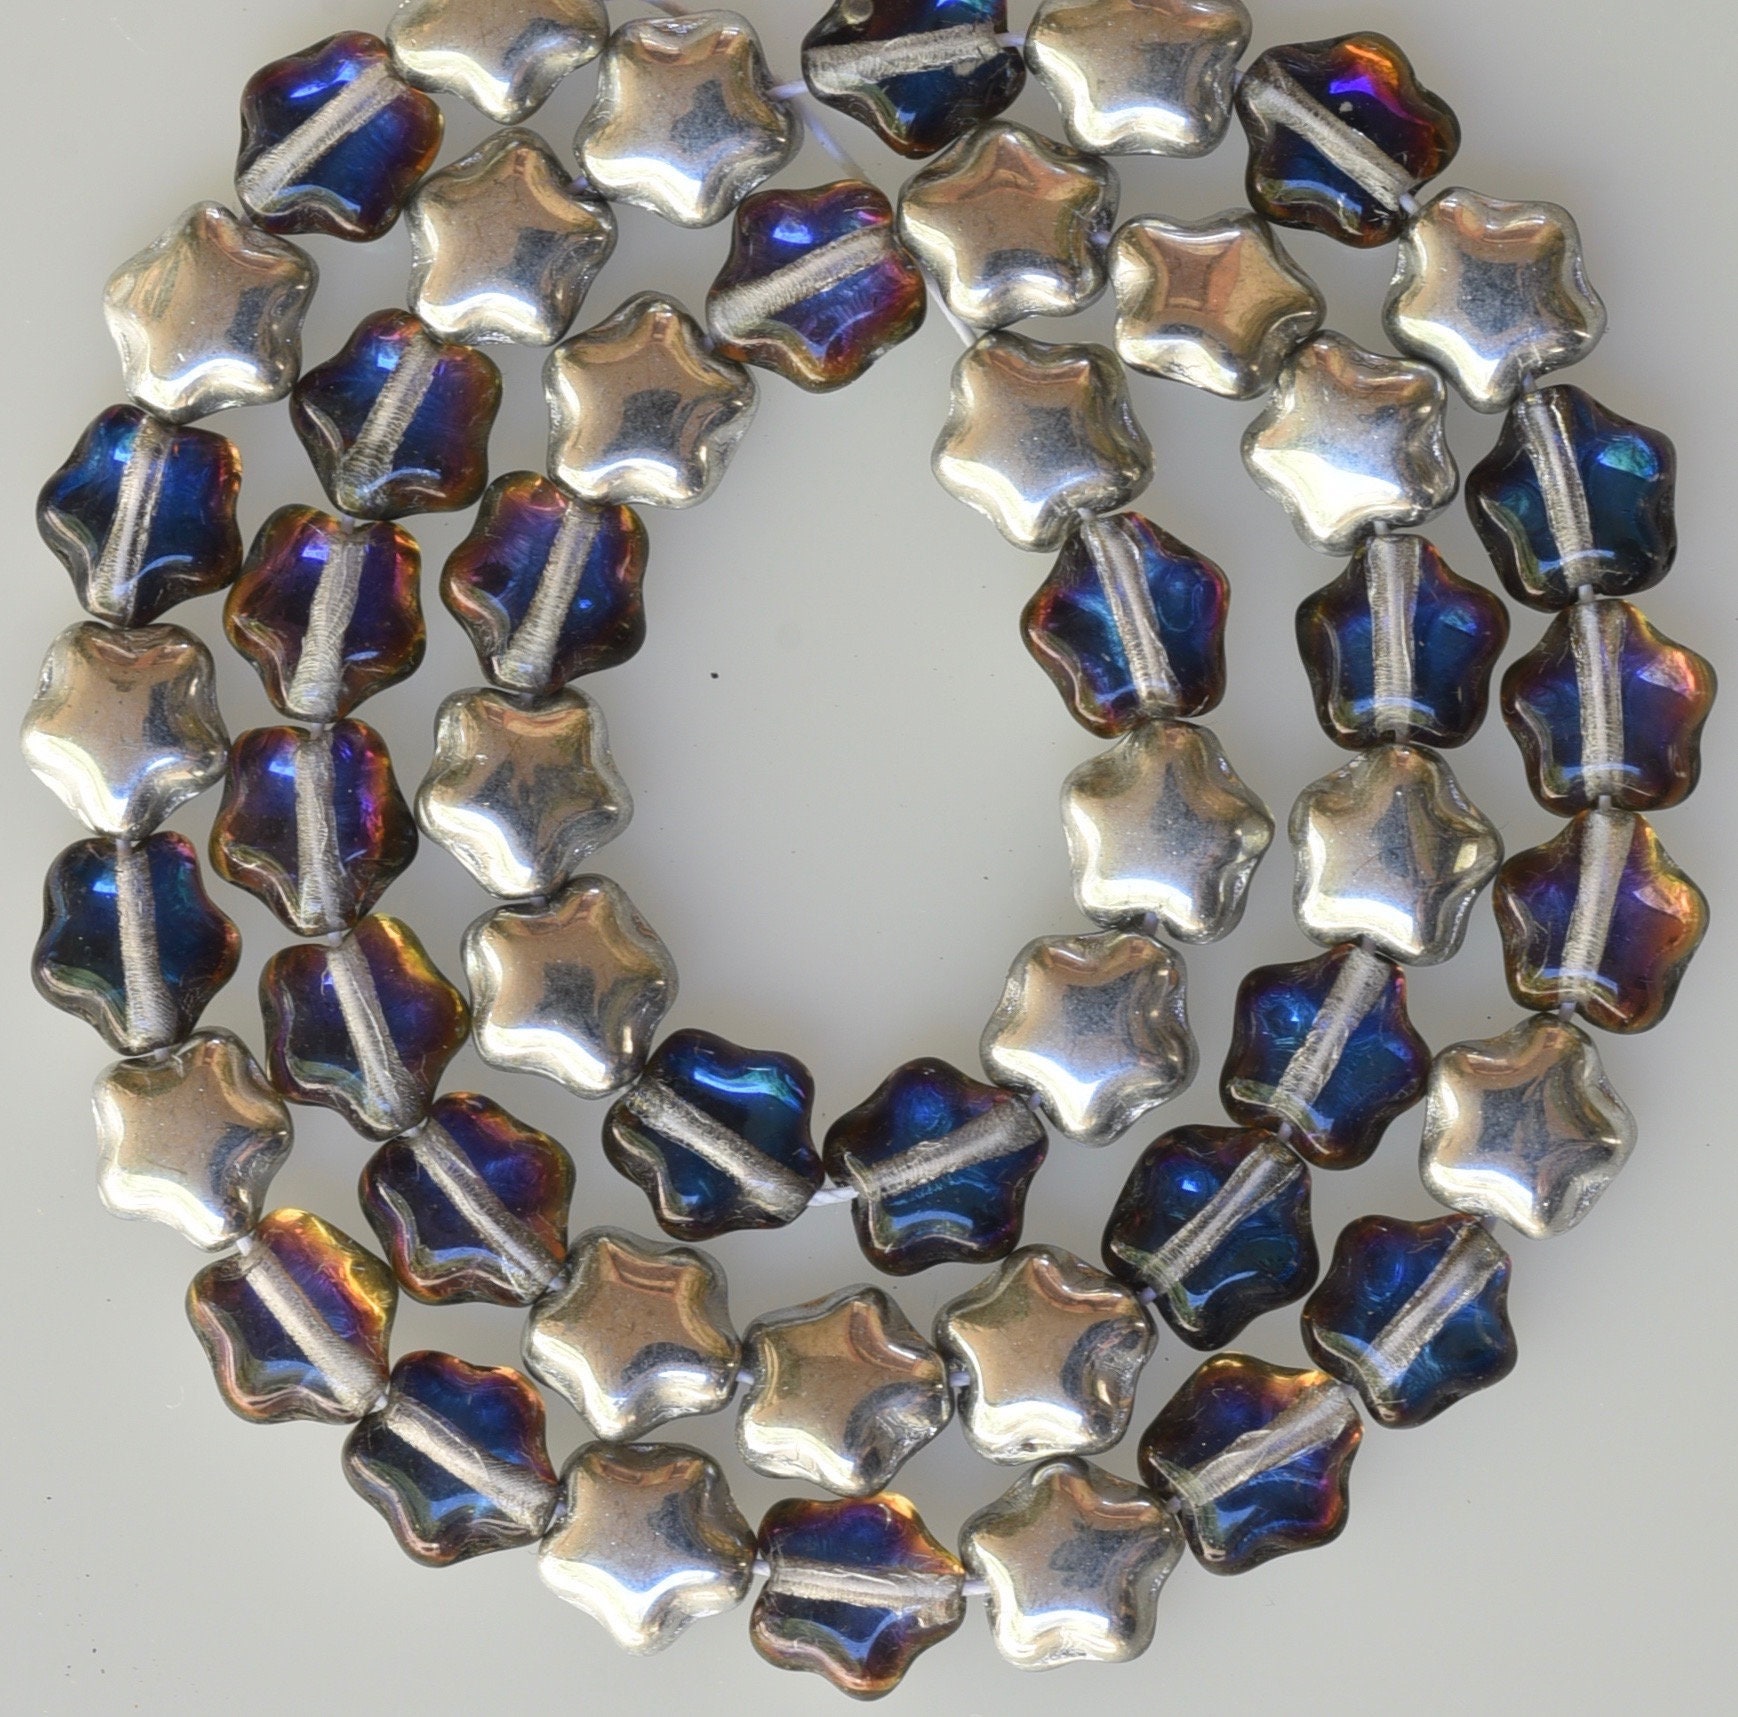 Diamond Fishing Glow Beads - 100 Pack - Oval